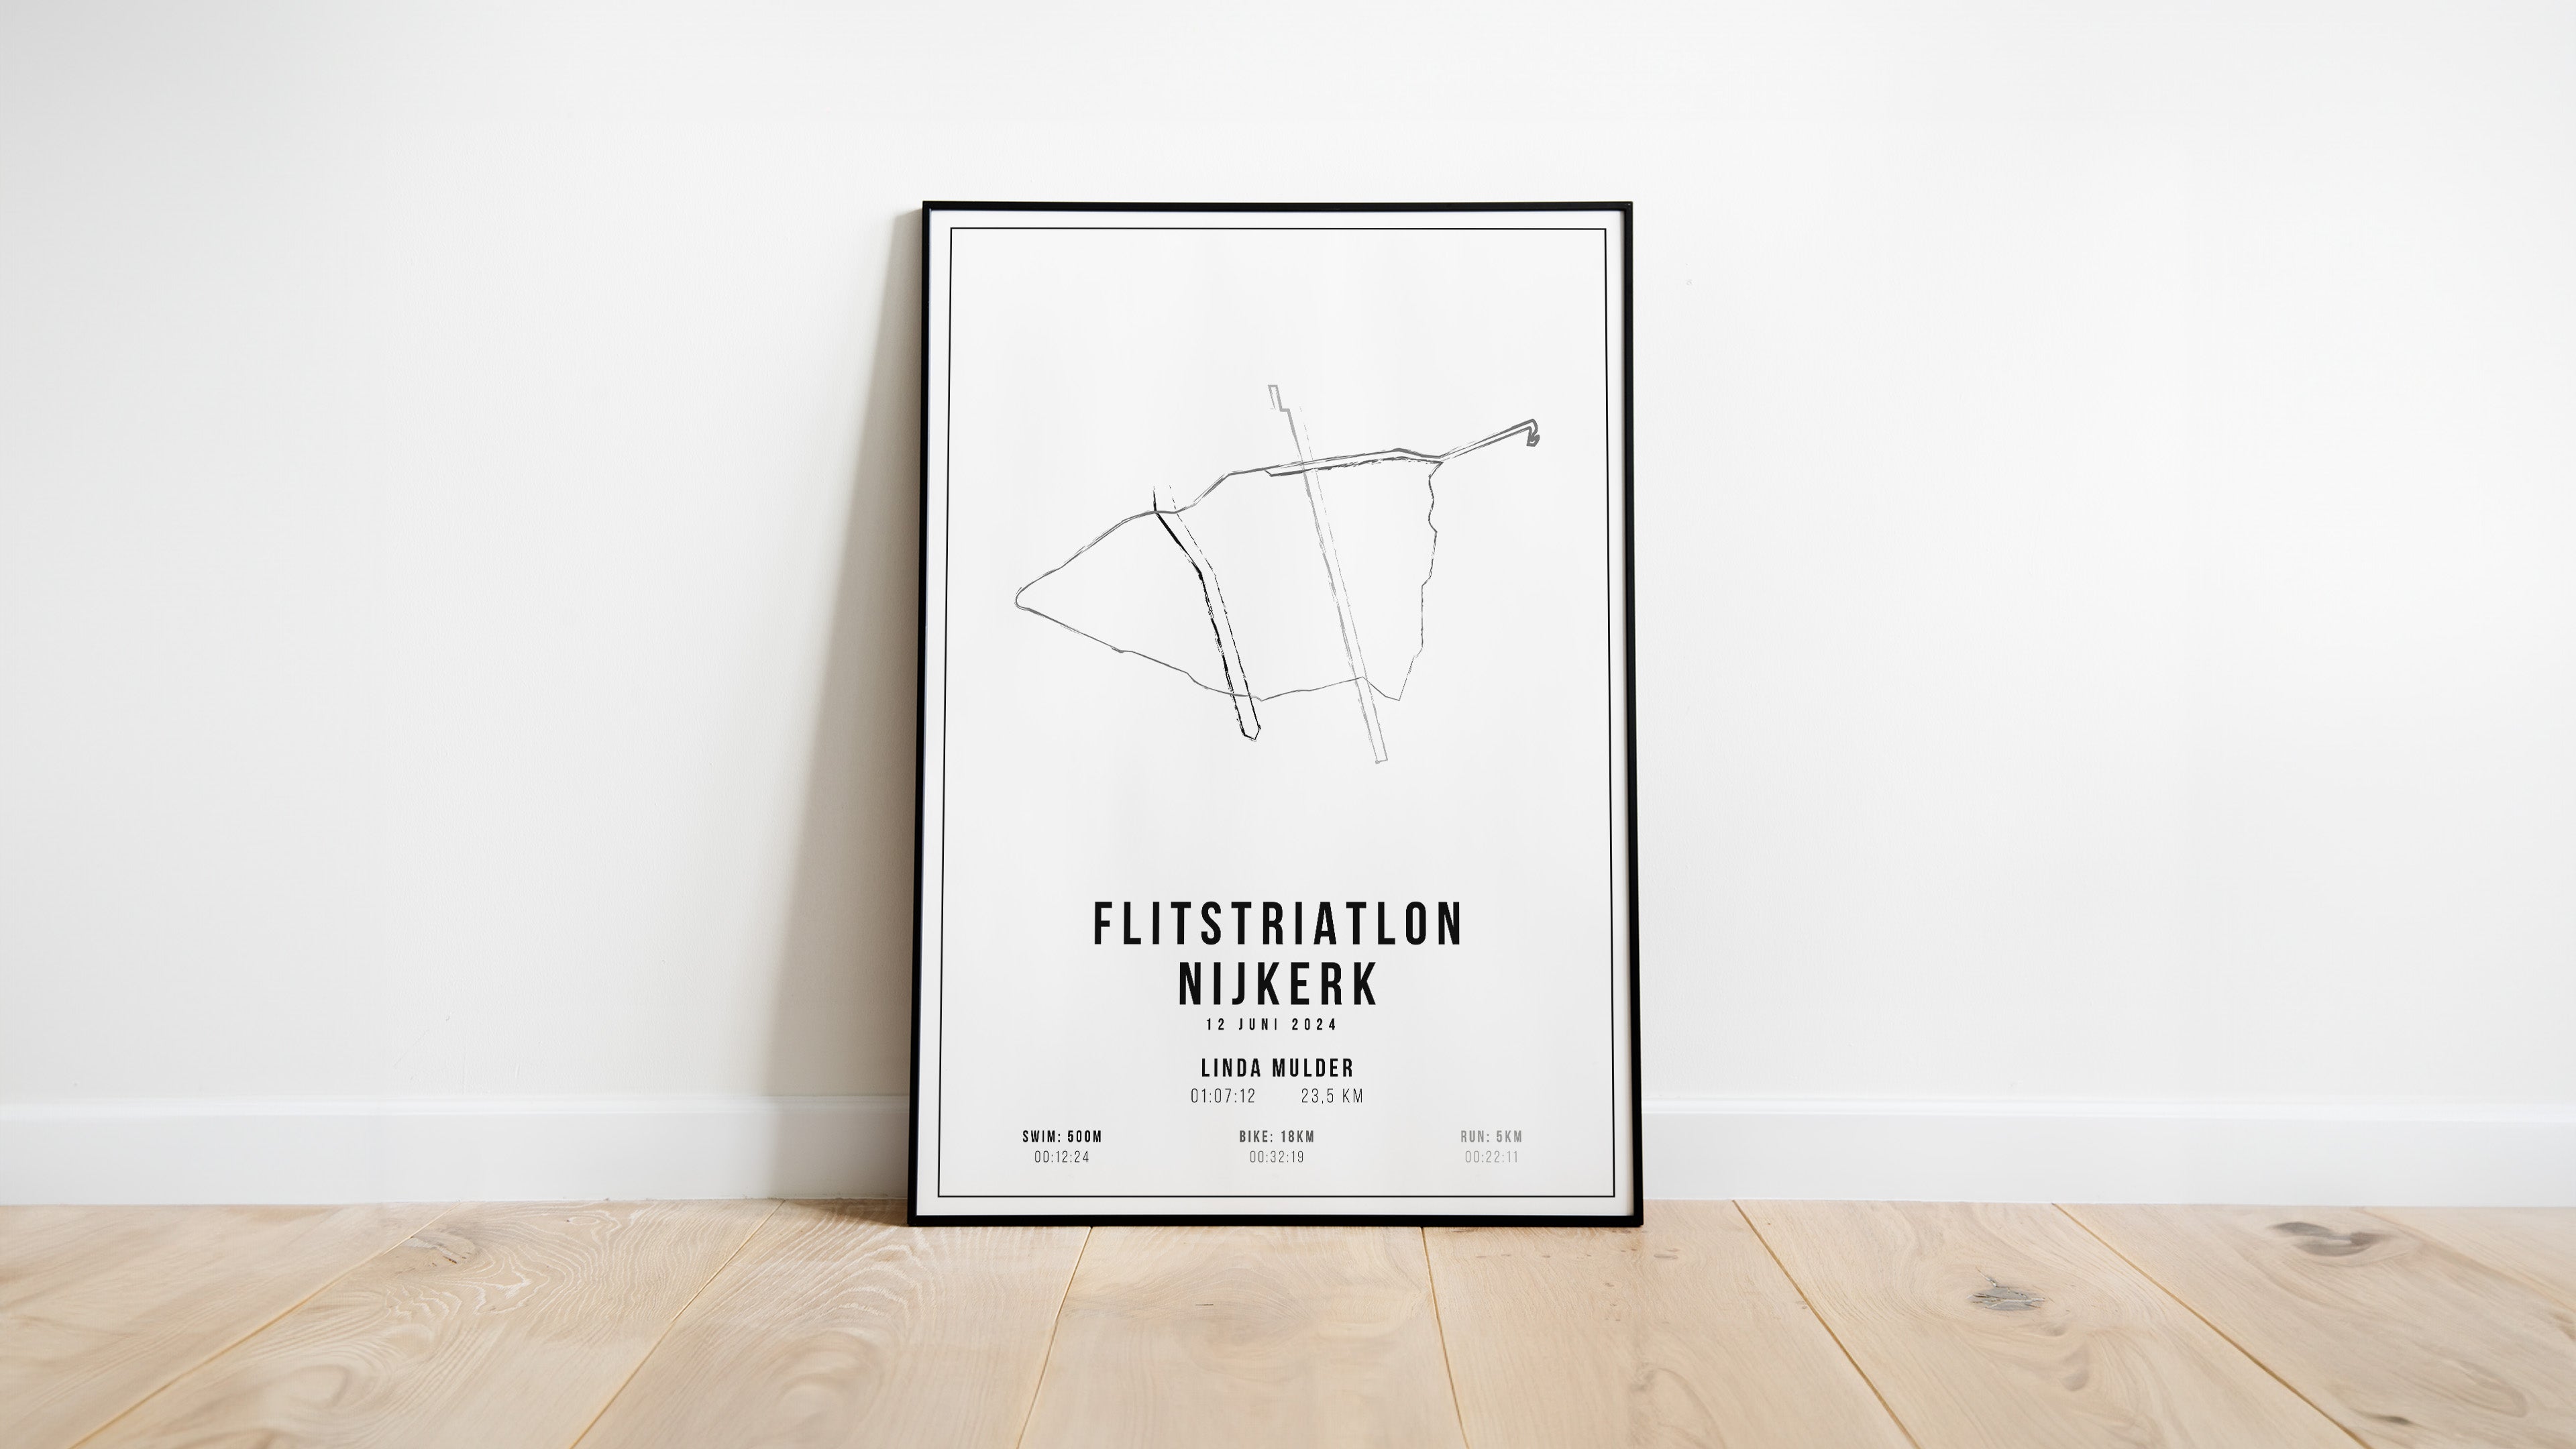 Flitstriatlon Nijkerk - Handmade Drawing - Poster